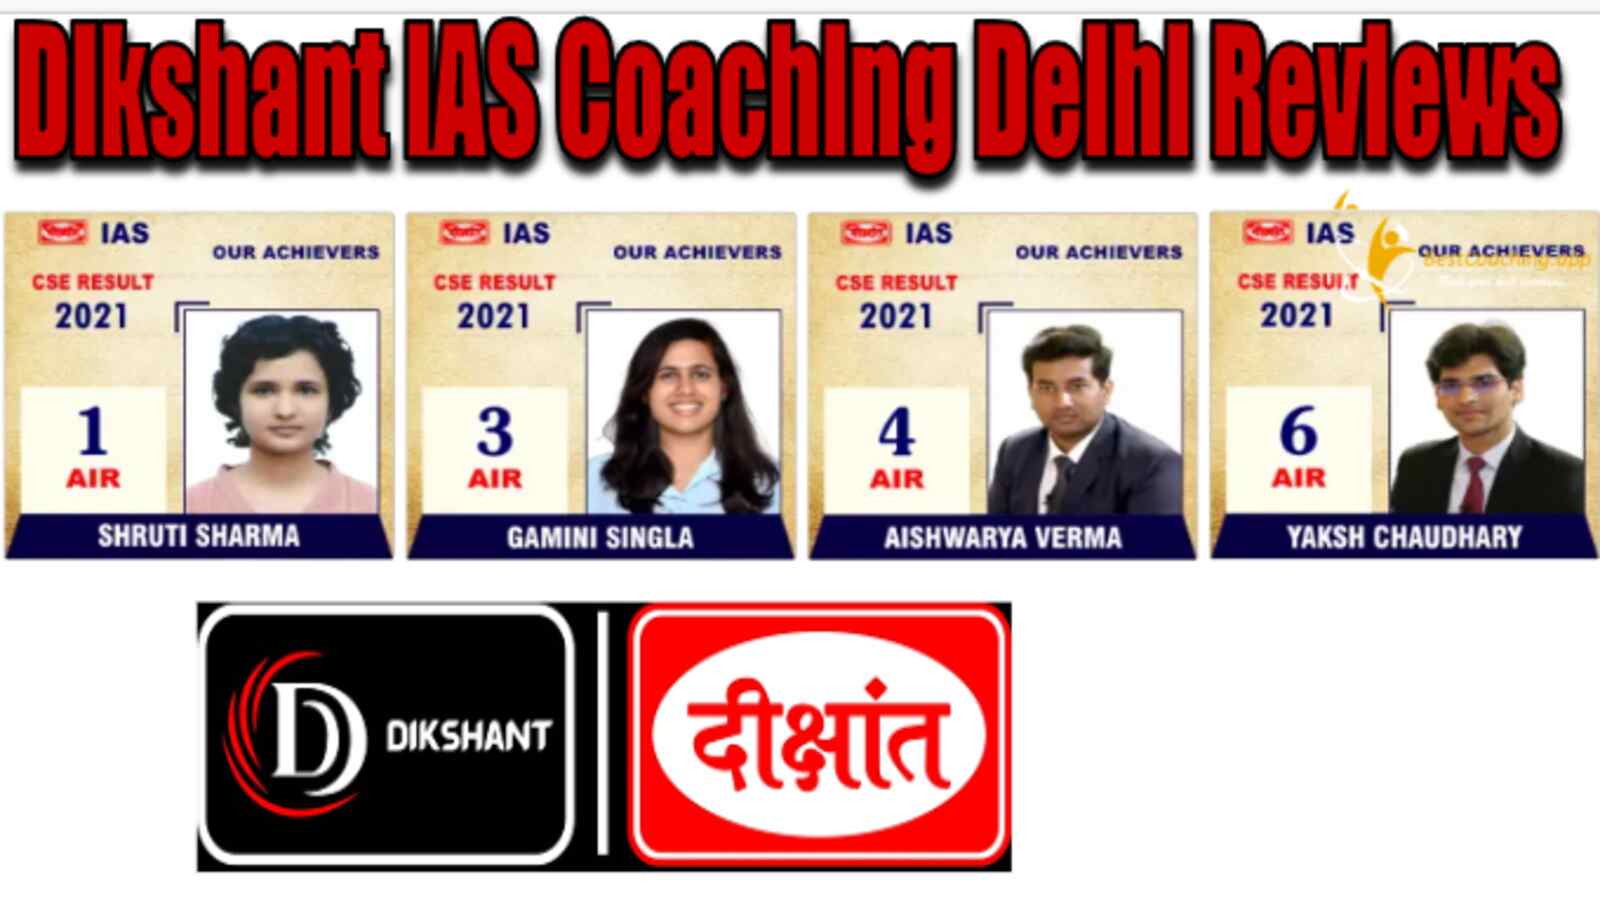 Dikshant IAS Coaching Delhi Review Result